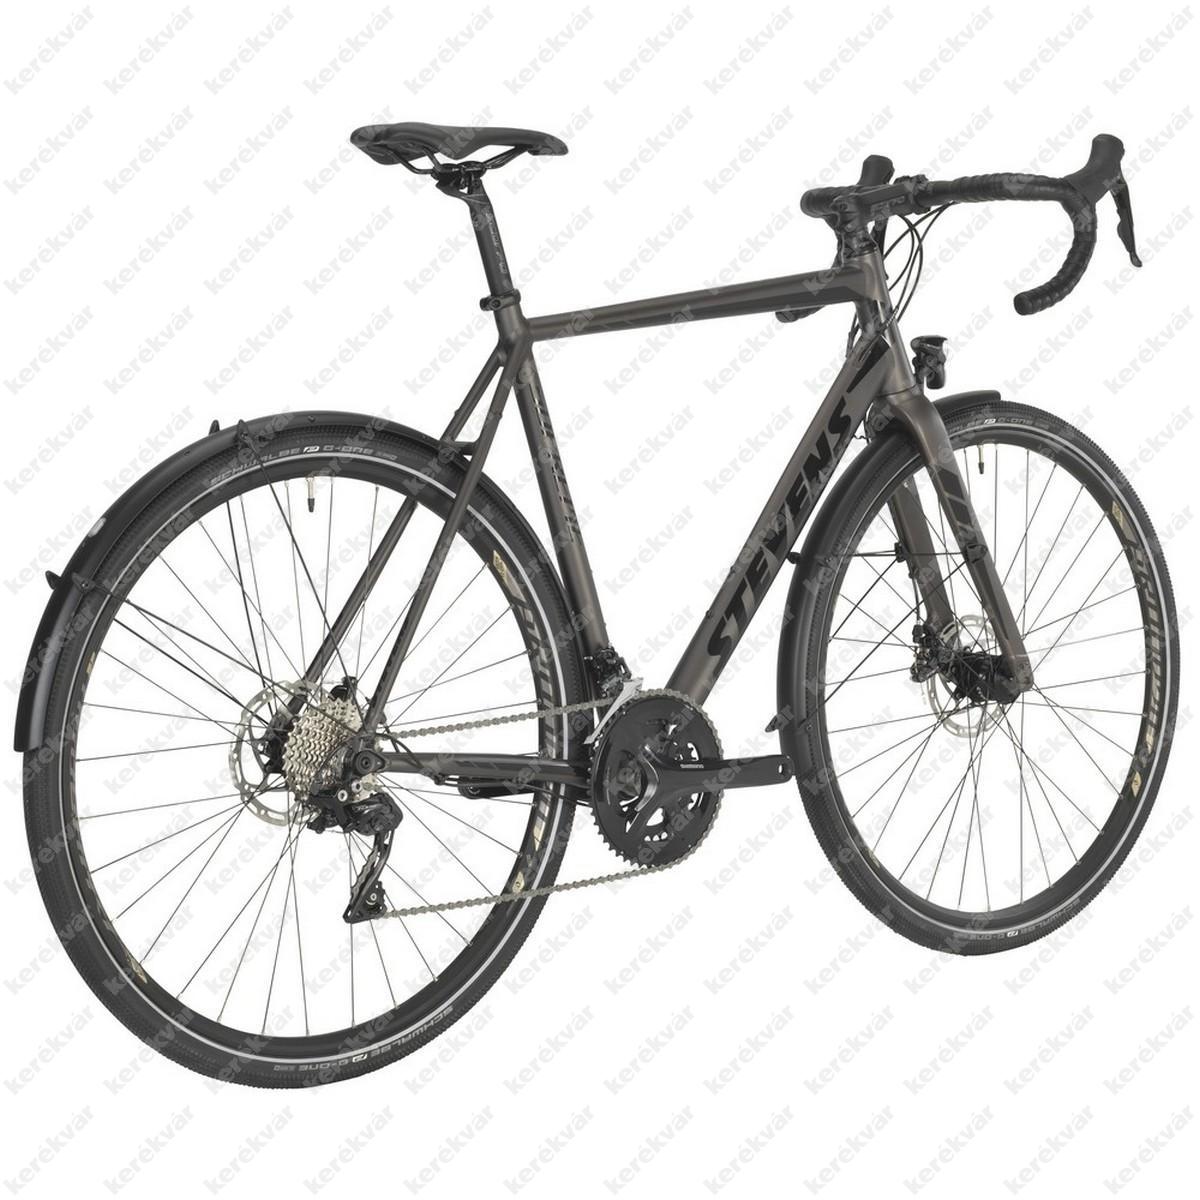 Stevens Supreme bicycle grey 2020